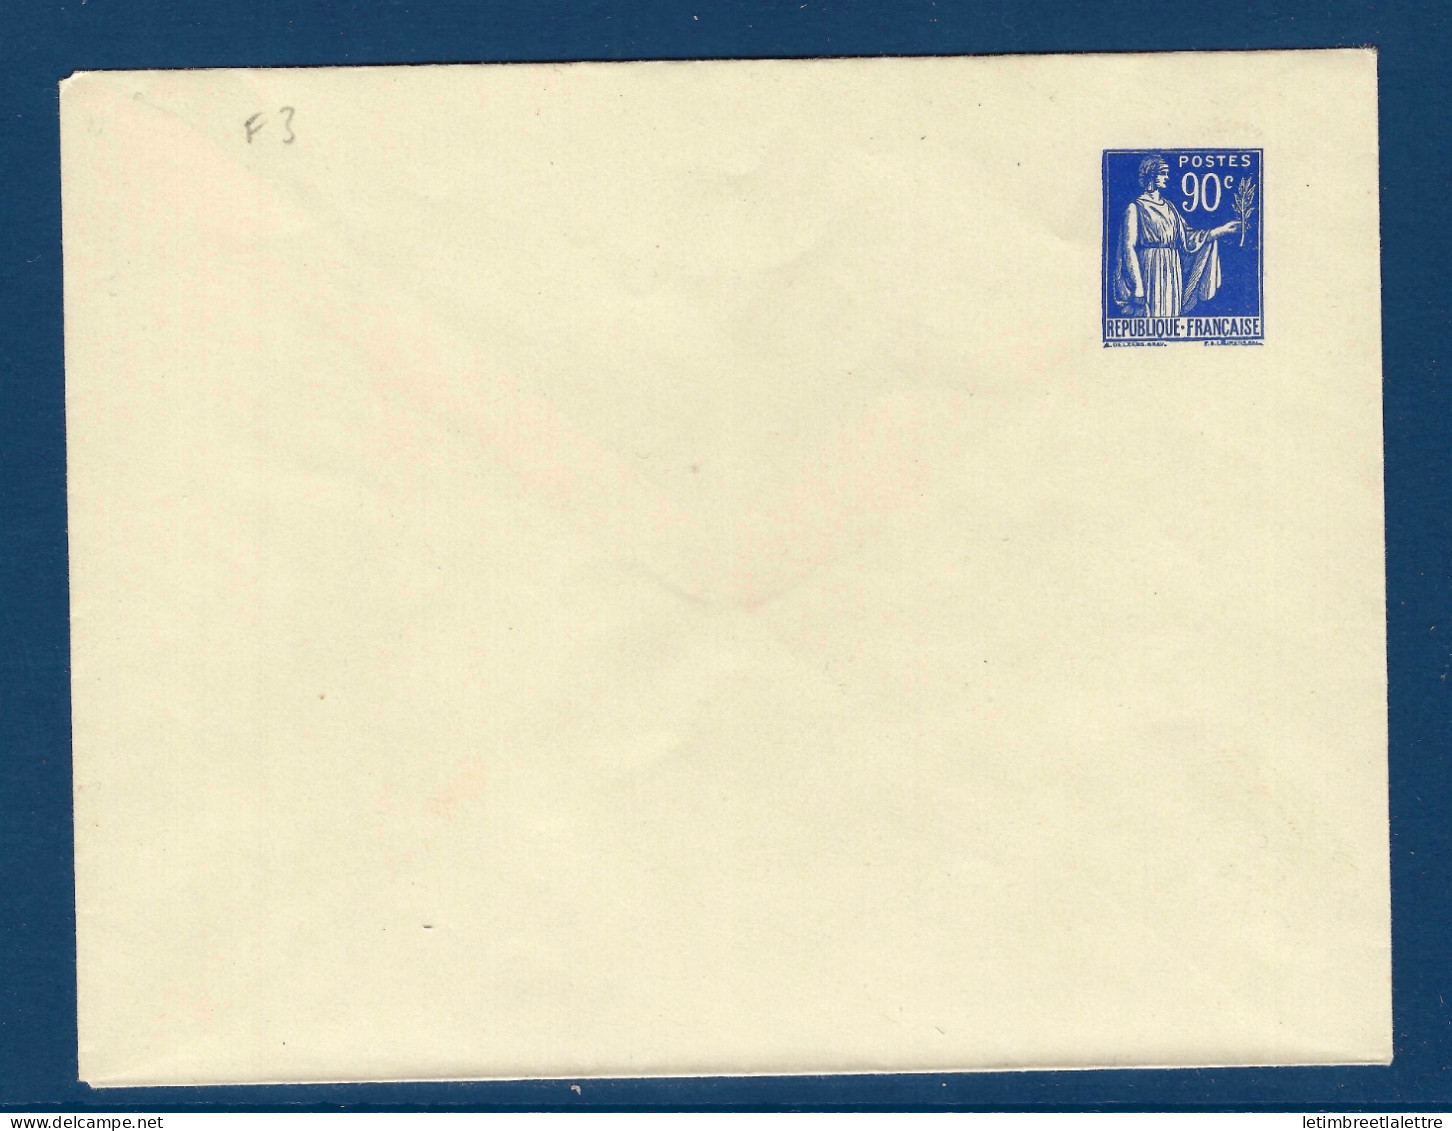 France - Entier Postal - Enveloppe F 3 - 1939 - Standard- Und TSC-AK (vor 1995)